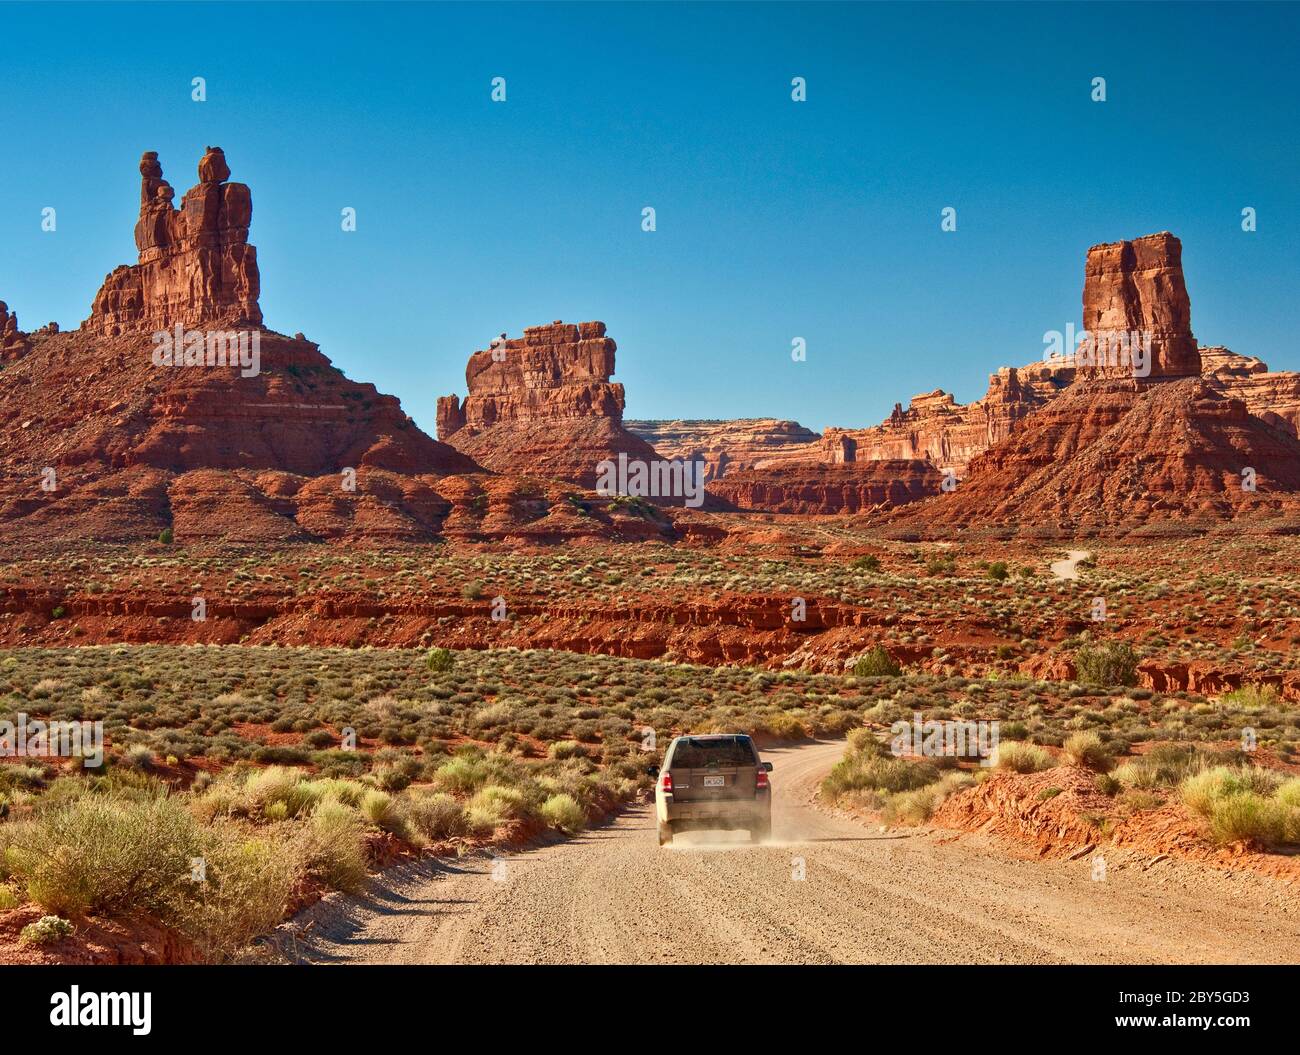 Auto auf unbefestigten Straßen, Sandsteinfelsen im Valley of the Gods, Bears Ears National Monument, Cedar Mesa, Utah, USA Stockfoto